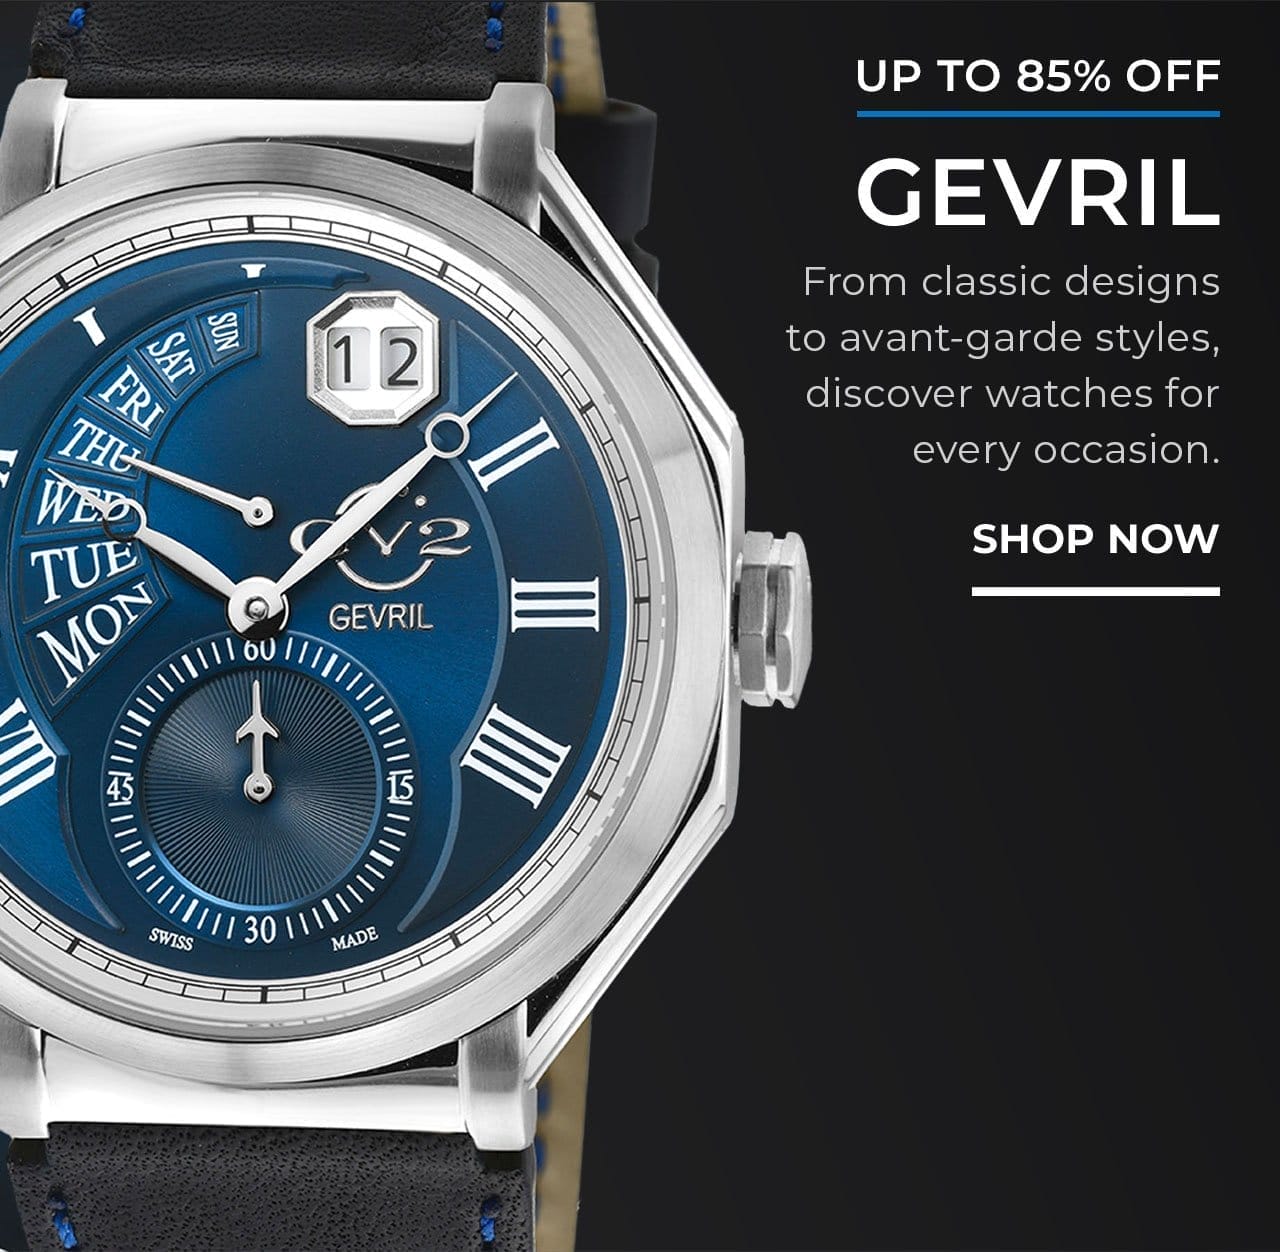 Gevril Timepieces | SHOP NOW